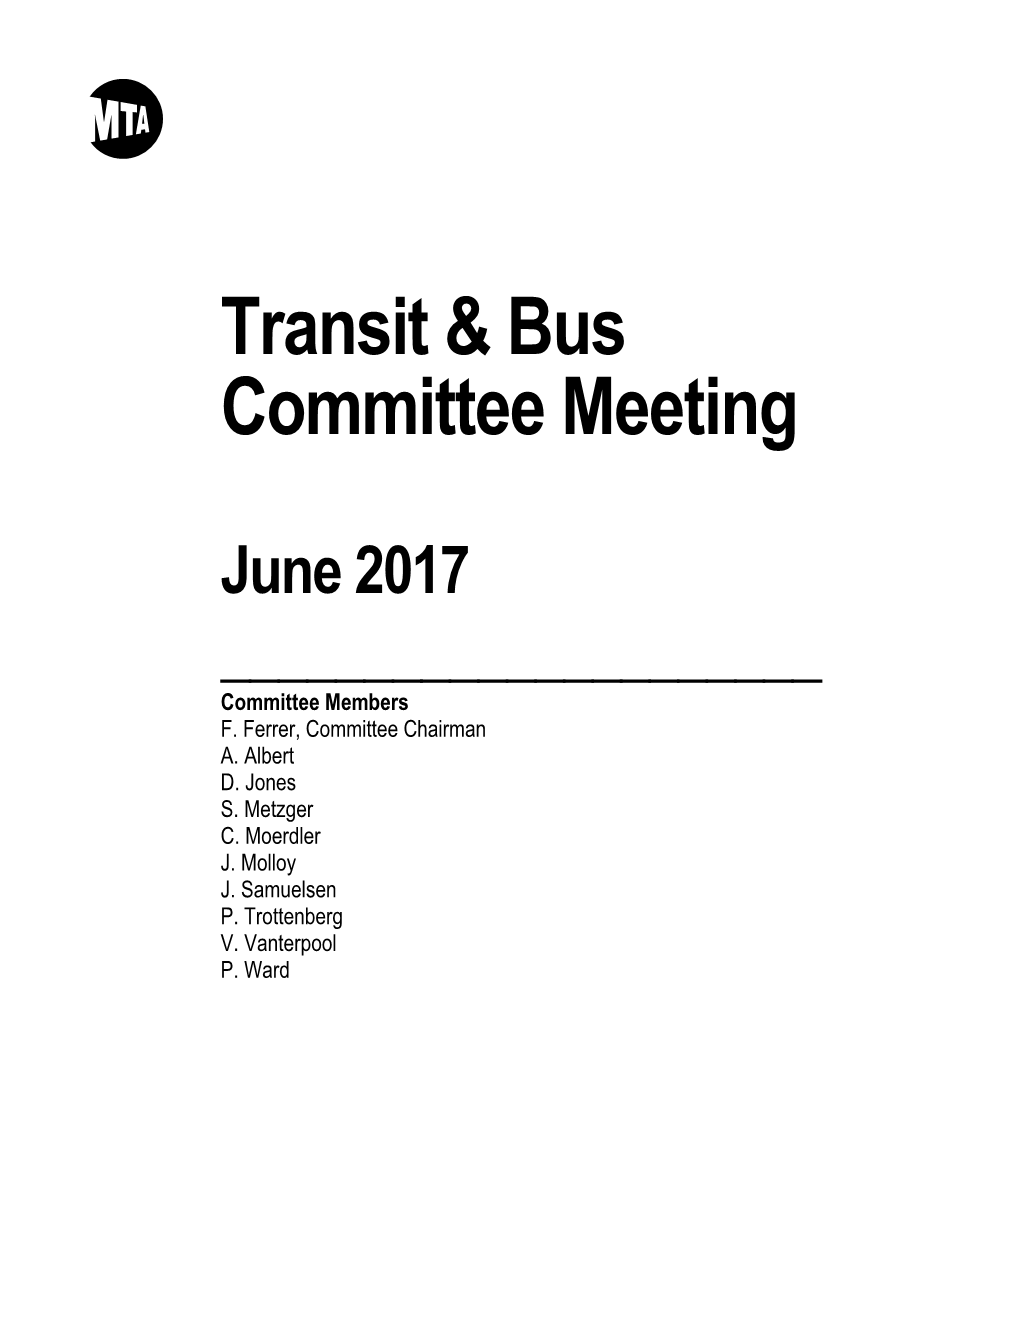 Transit & Bus Committee Meeting